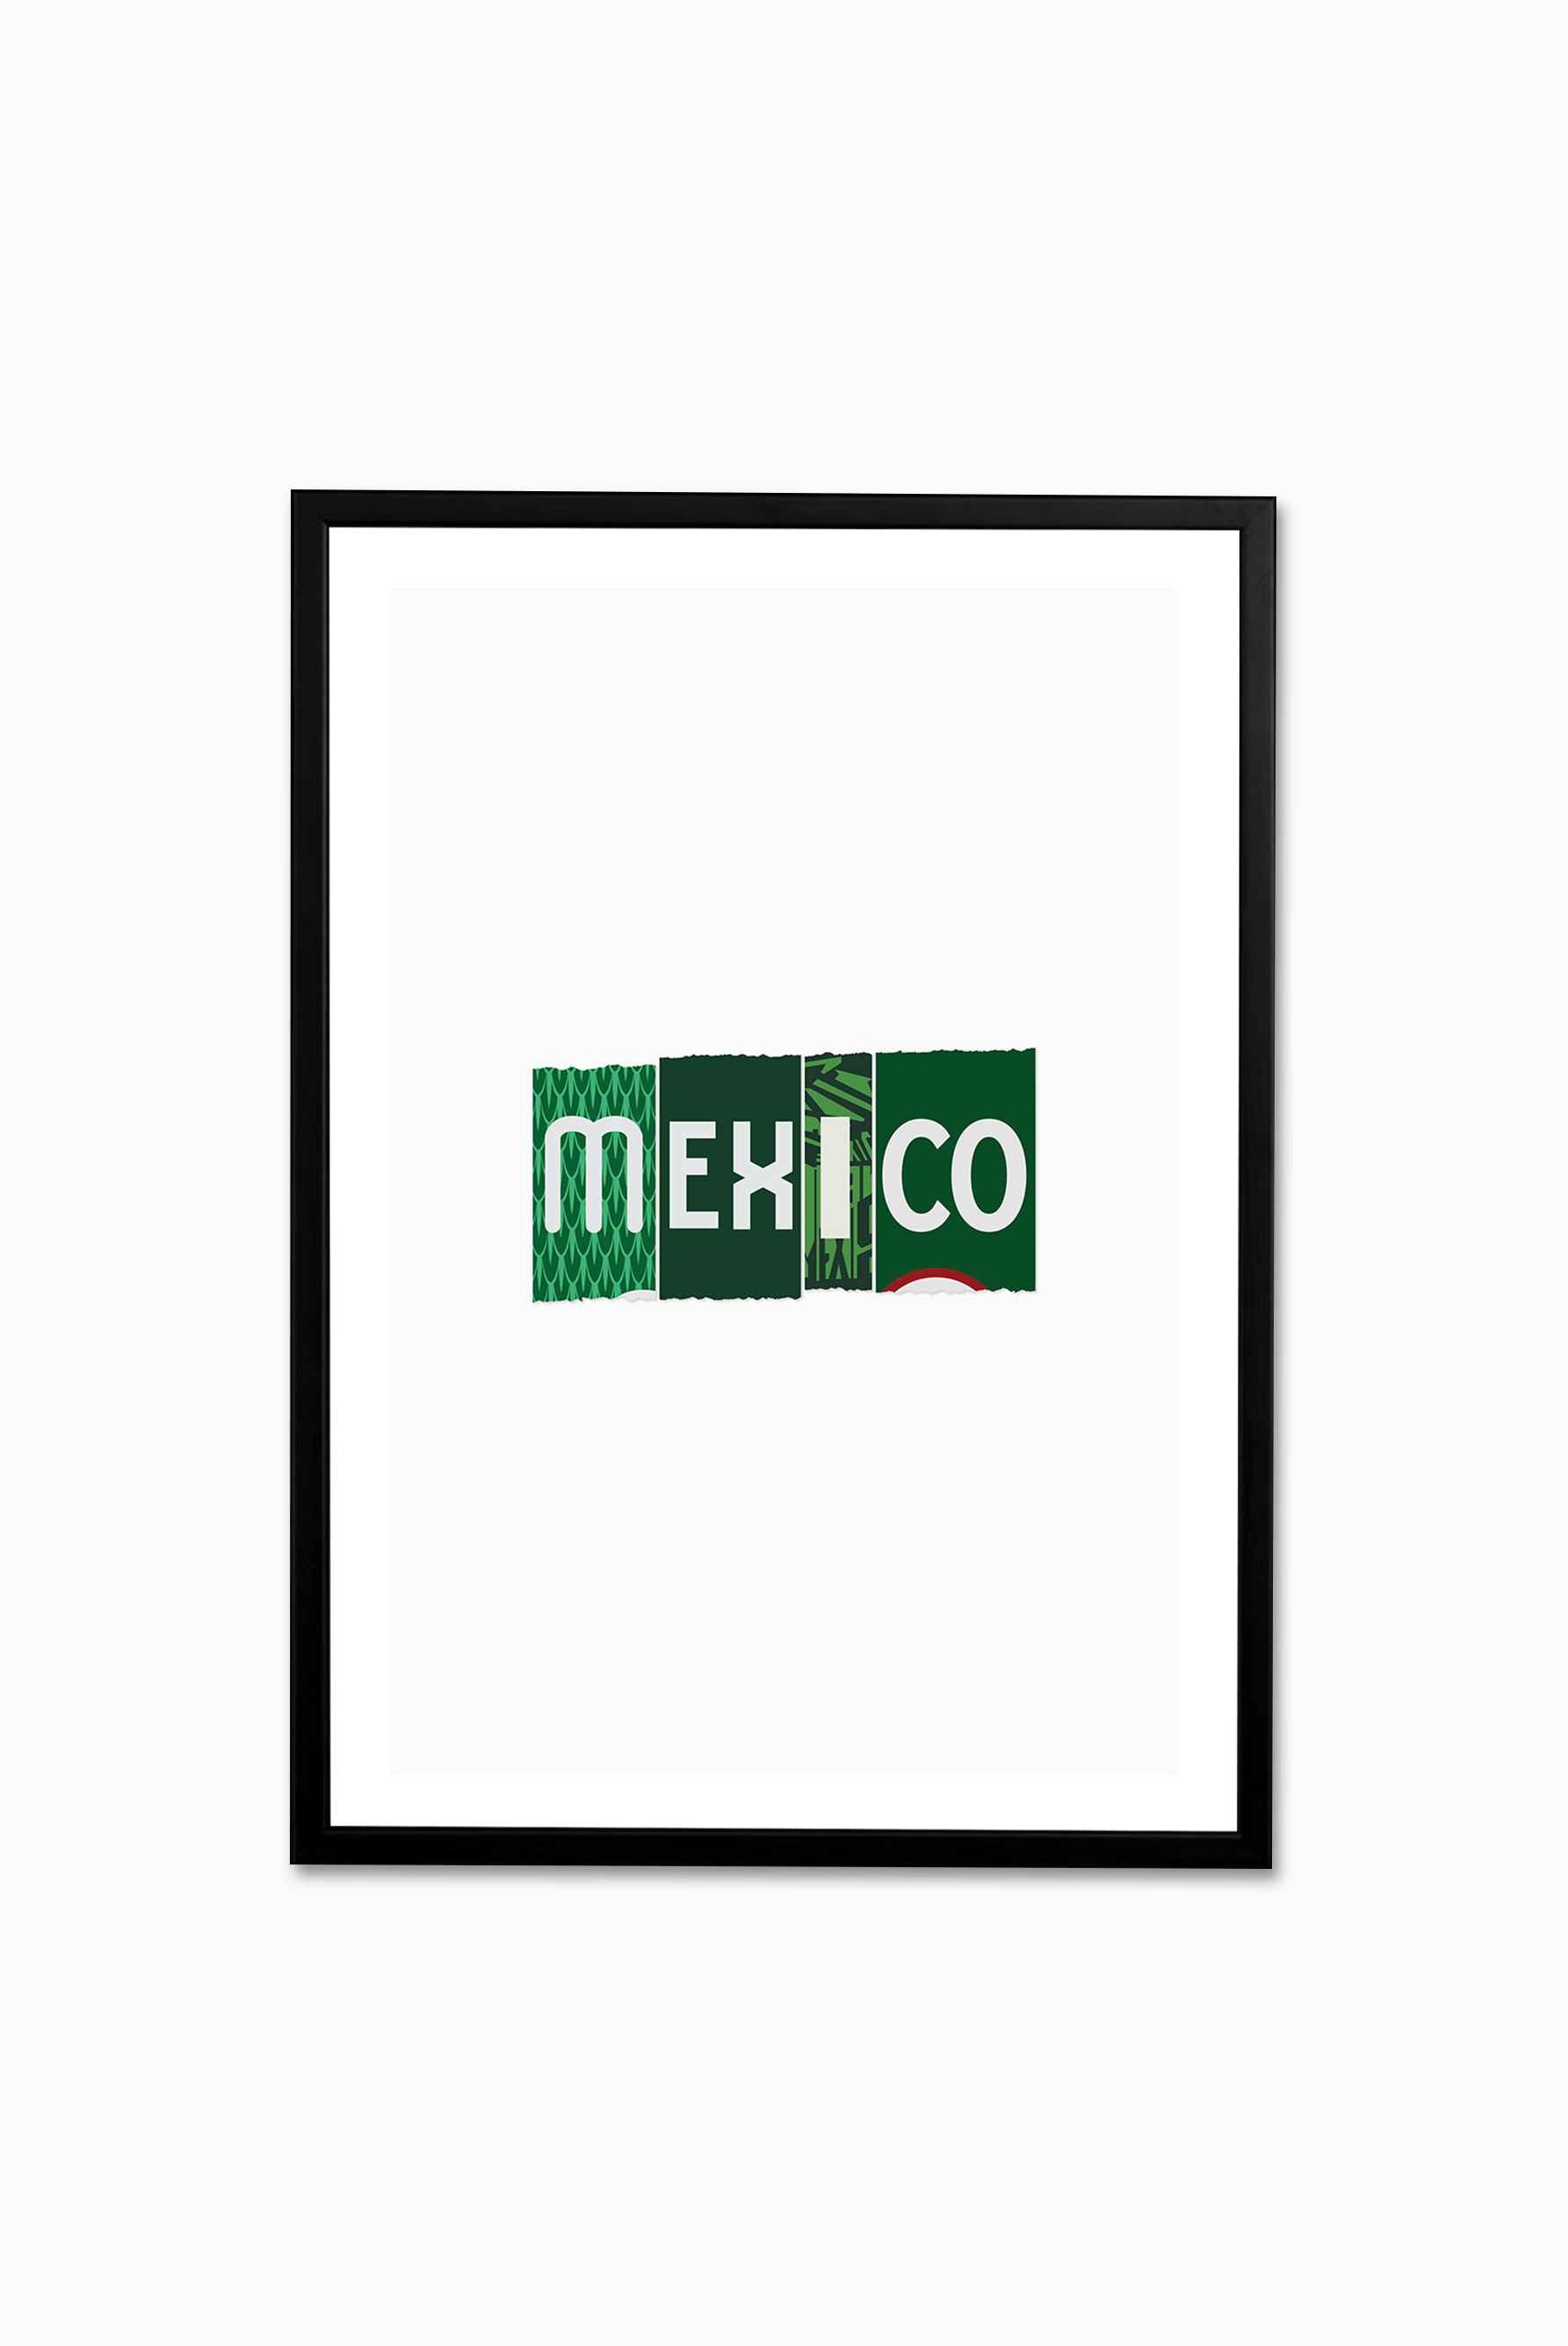 Mexico Wear and Tear / Print